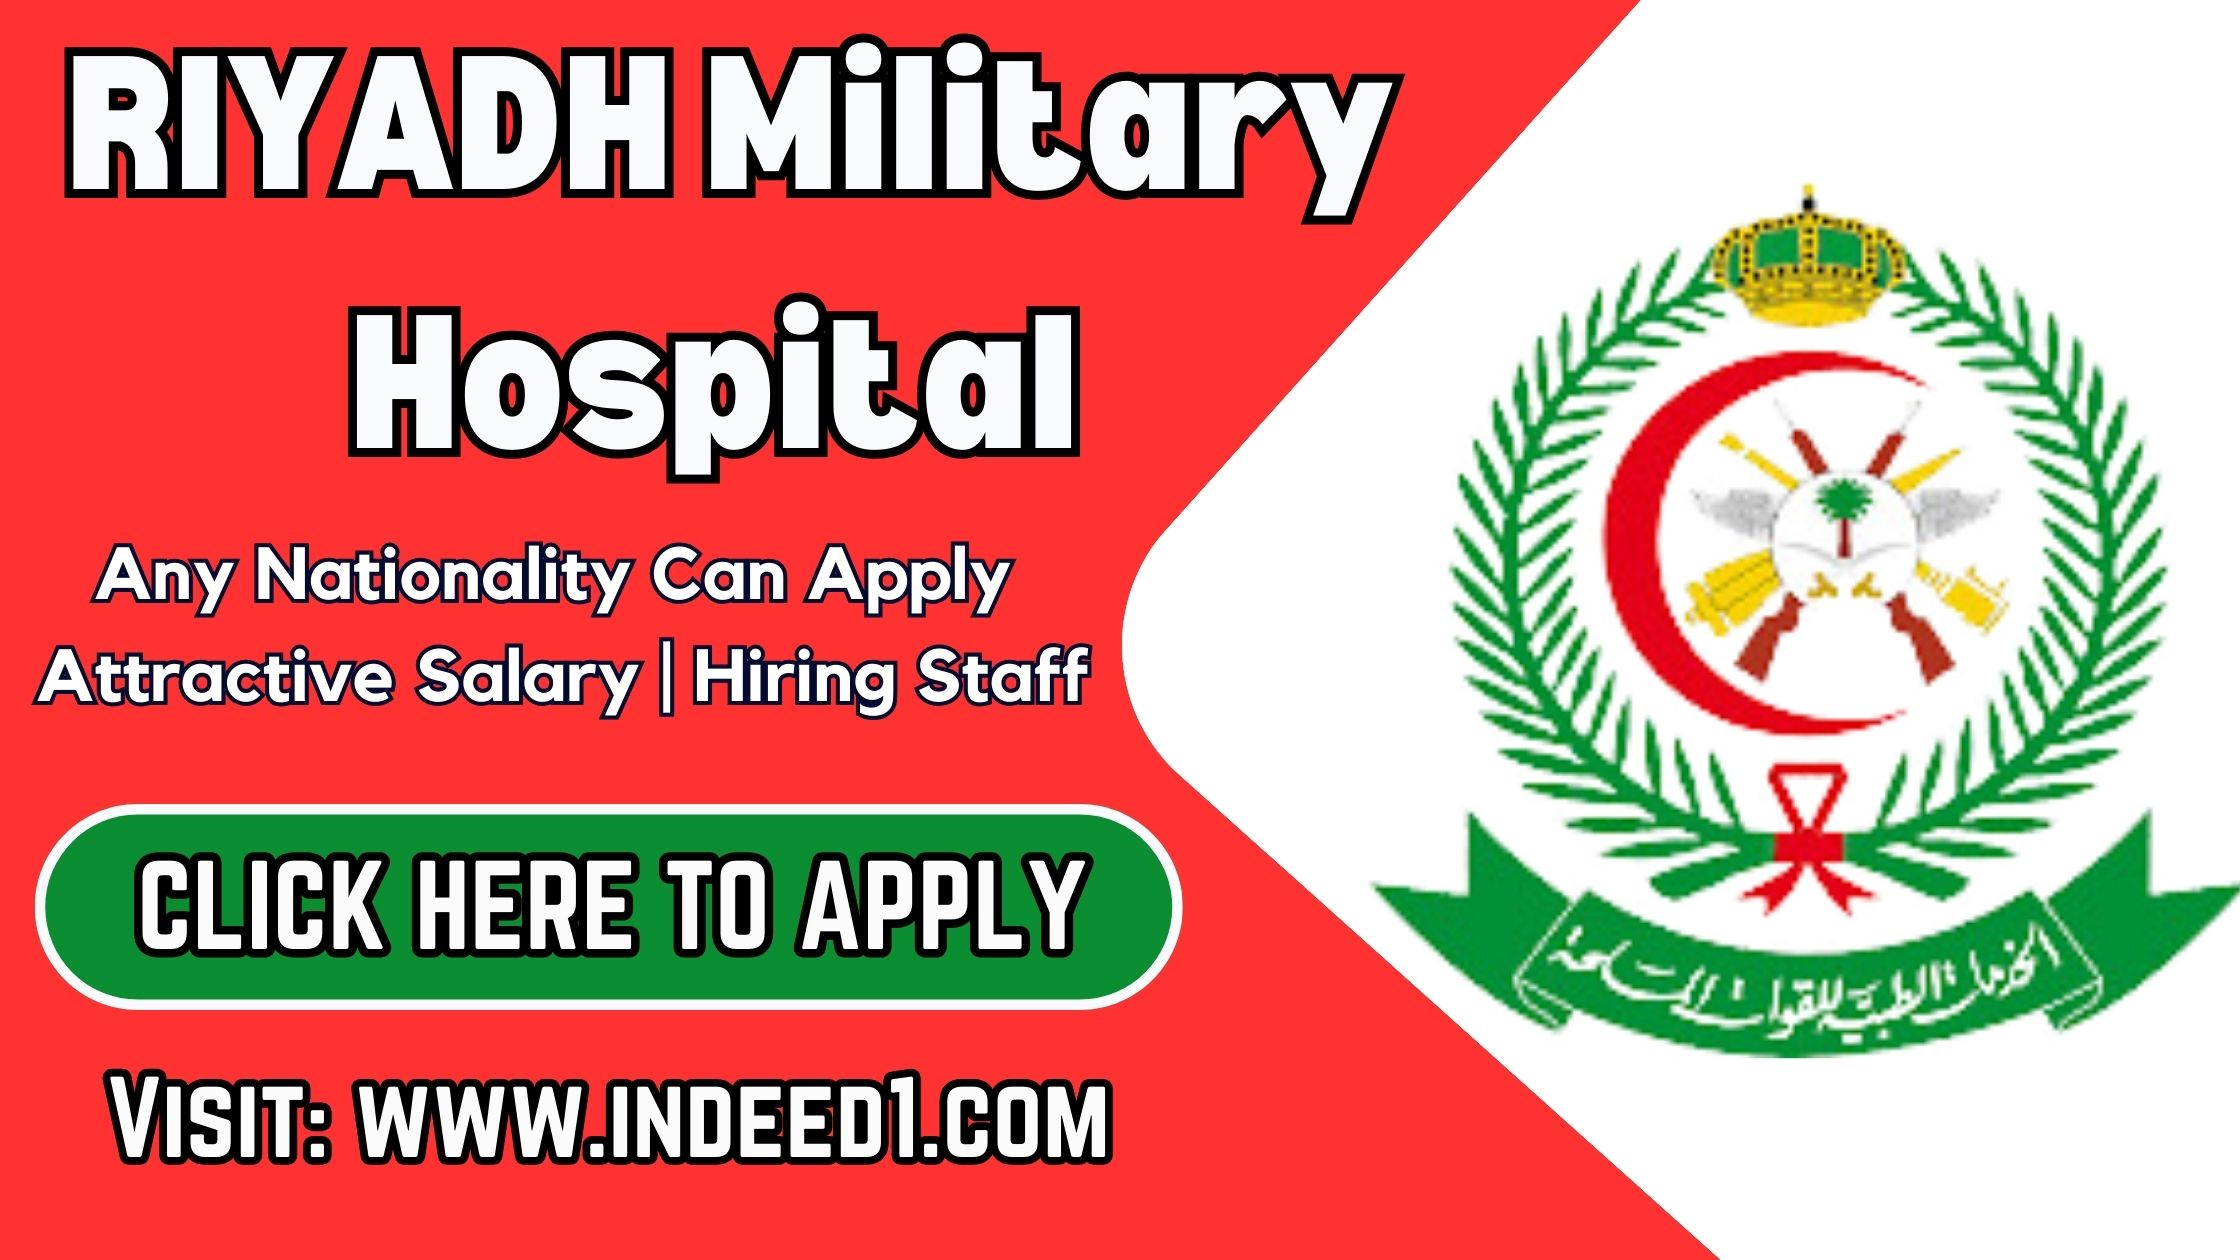 RIYADH Military Hospital Careers